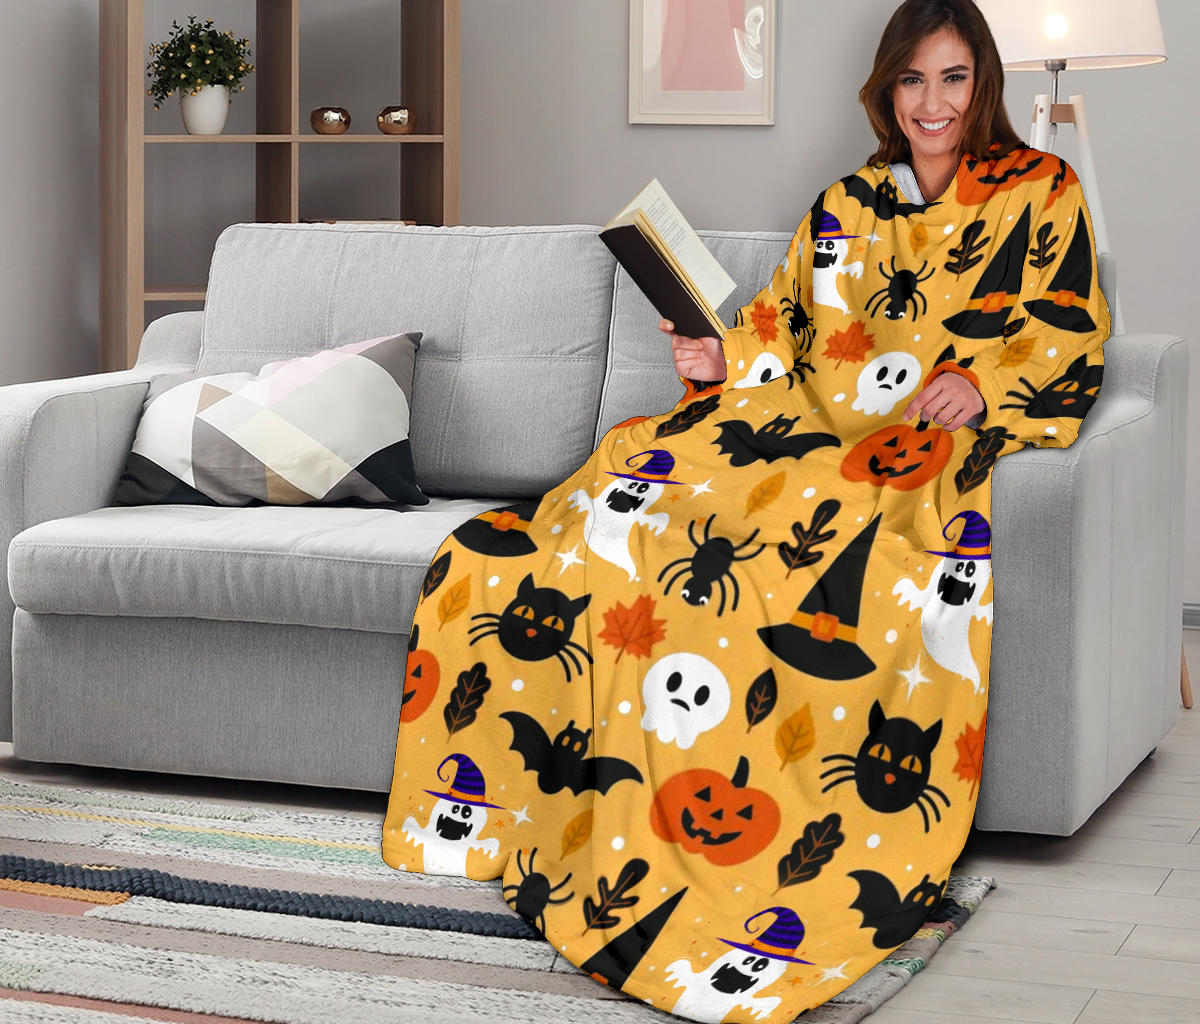 Pumpkin & Ghosts Halloween Sleeve Blanket